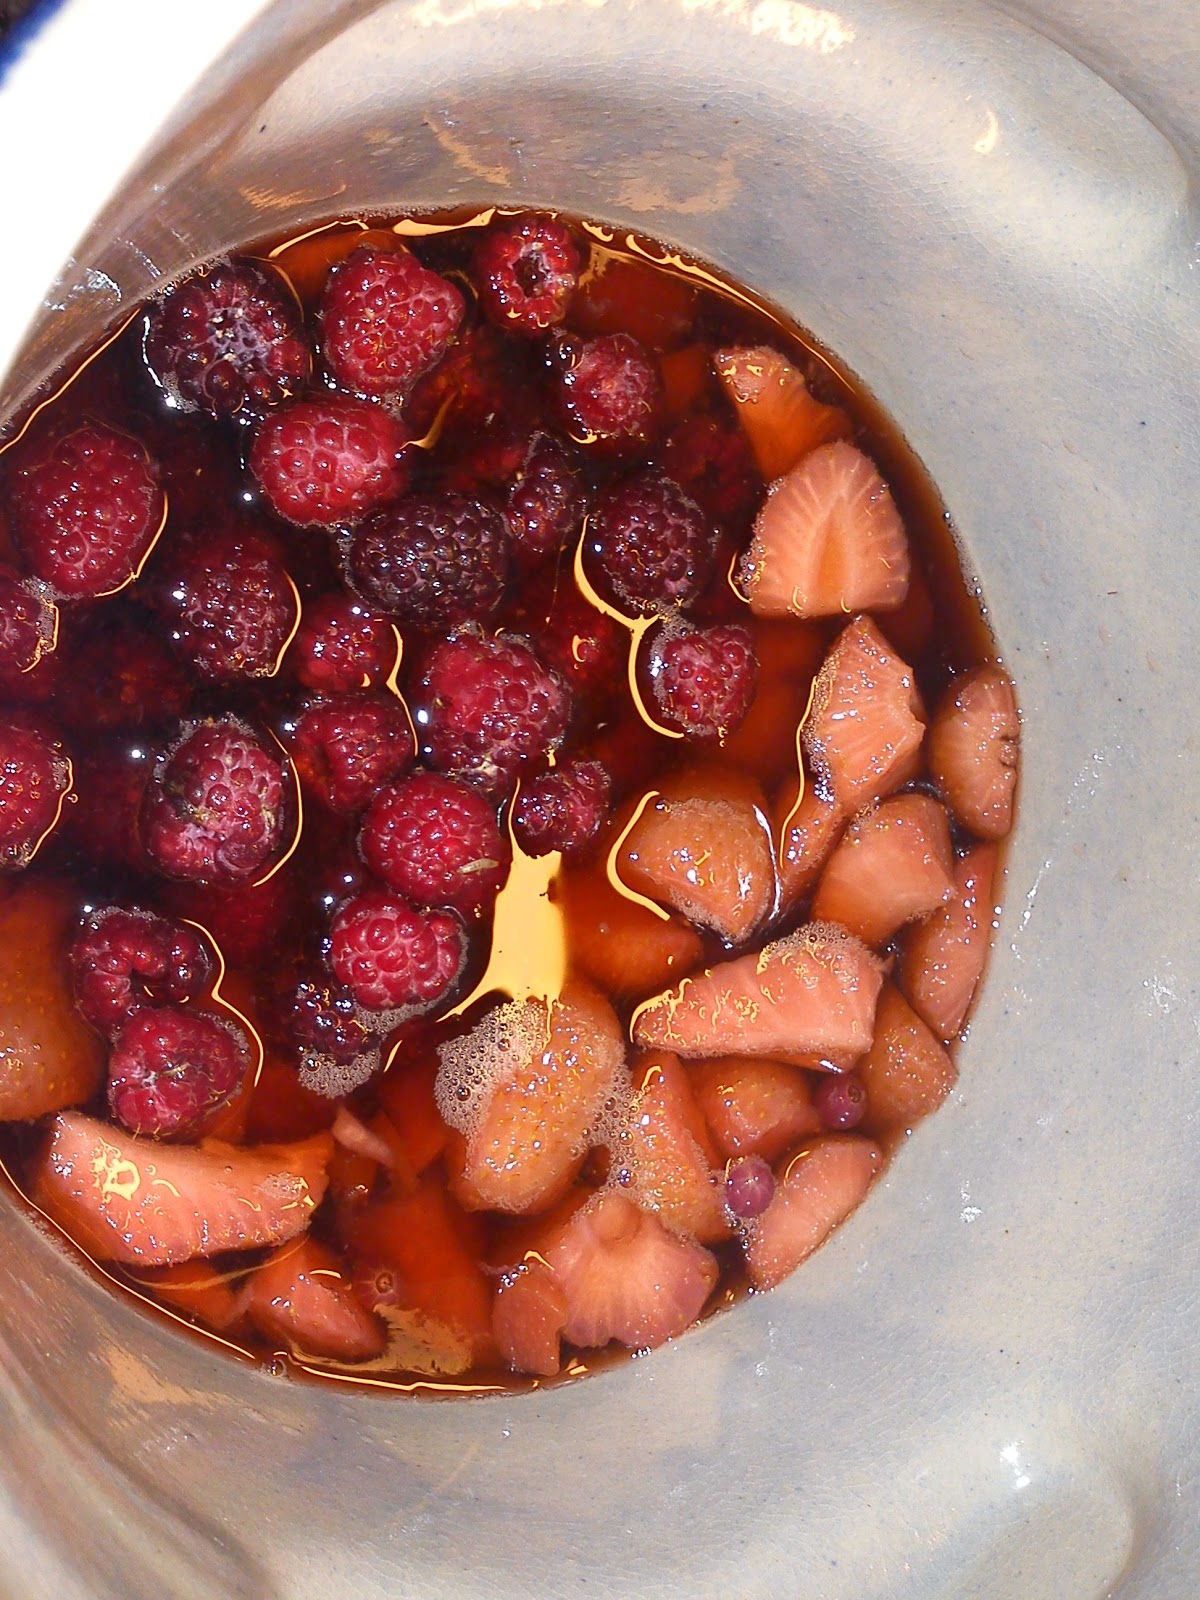 Kitchen of Kiki: Rumtopf - now with raspberries in-side